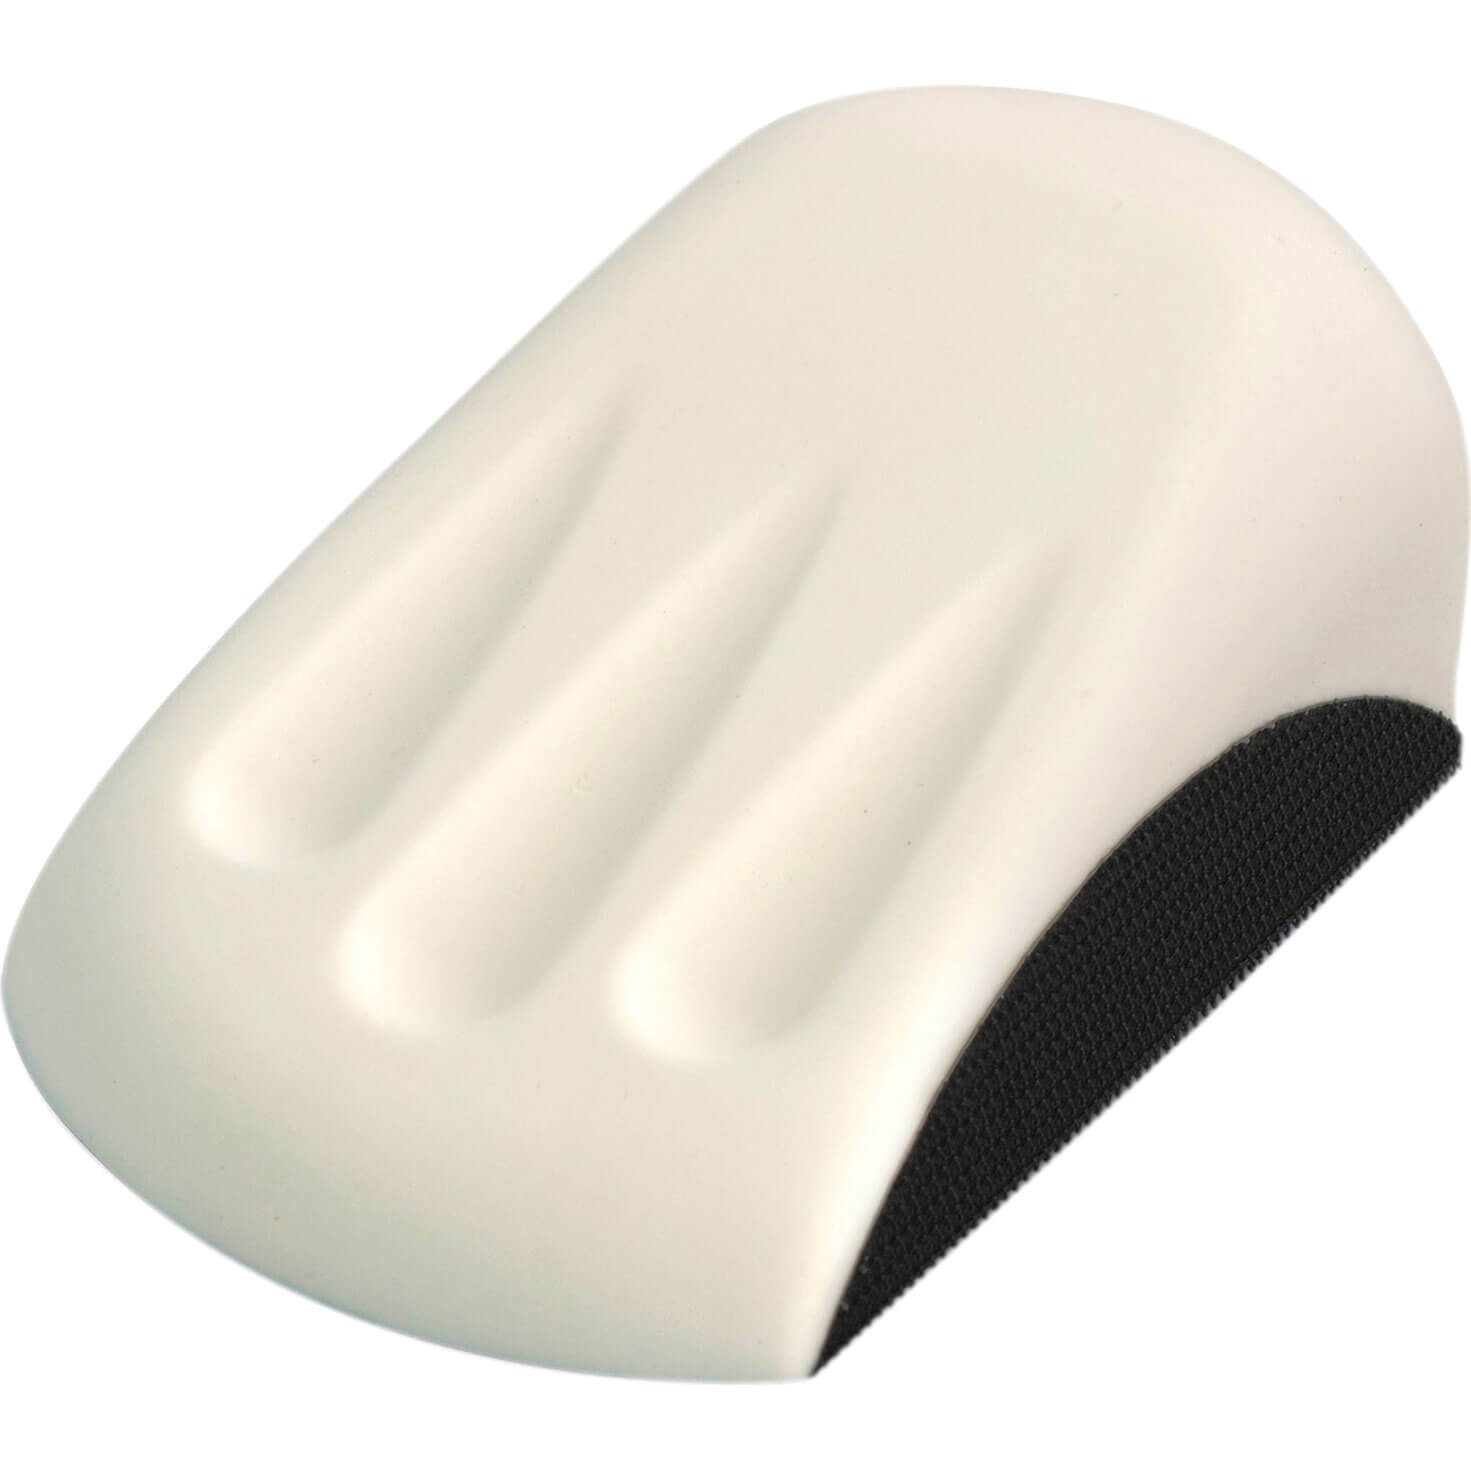 Image of Flexipad Hand Sanding Pad 125mm